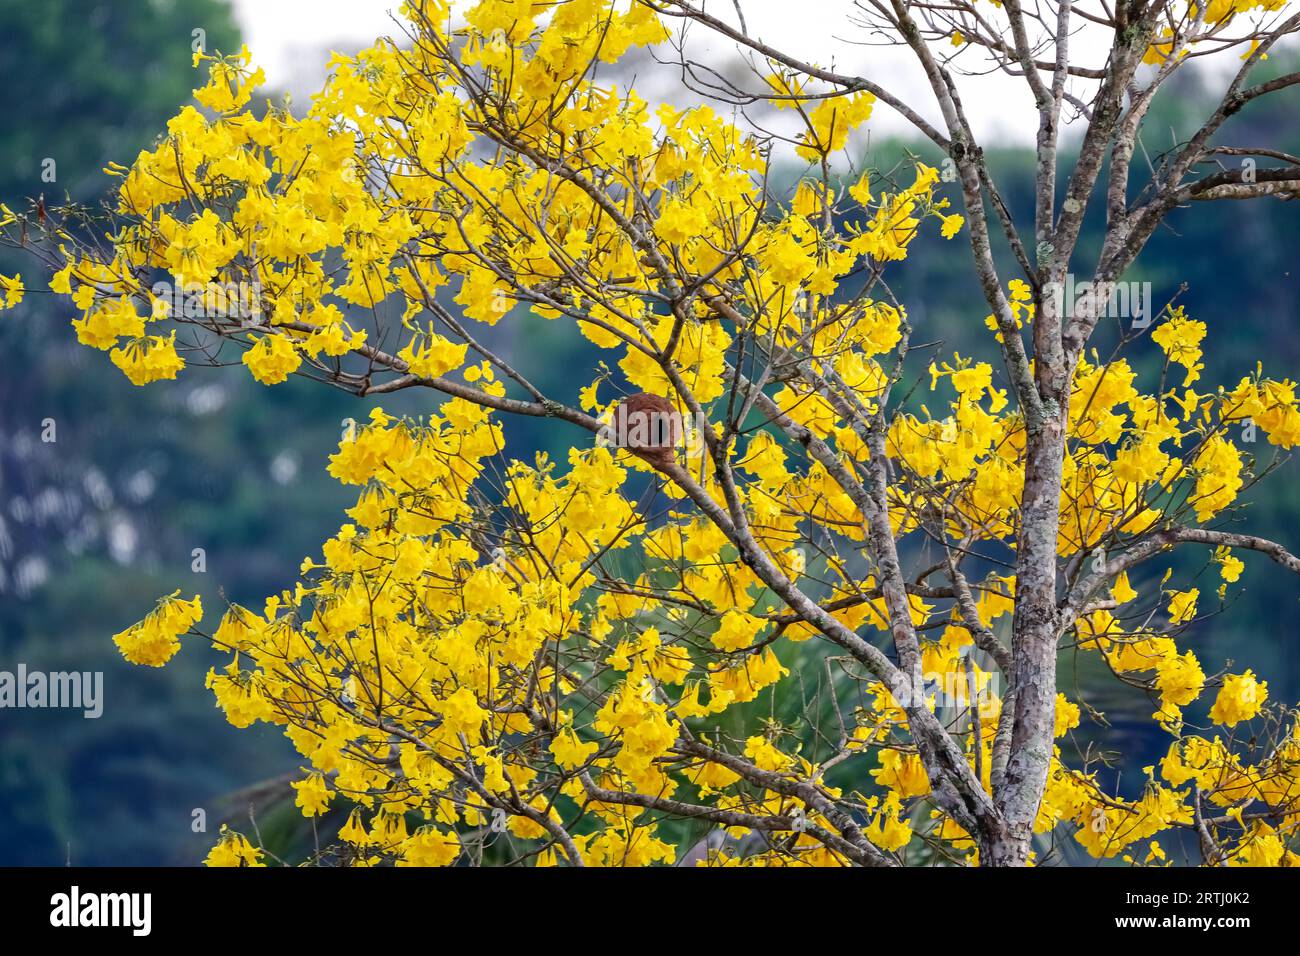 Yellow tree blossoms against dark defocused background Stock Photo